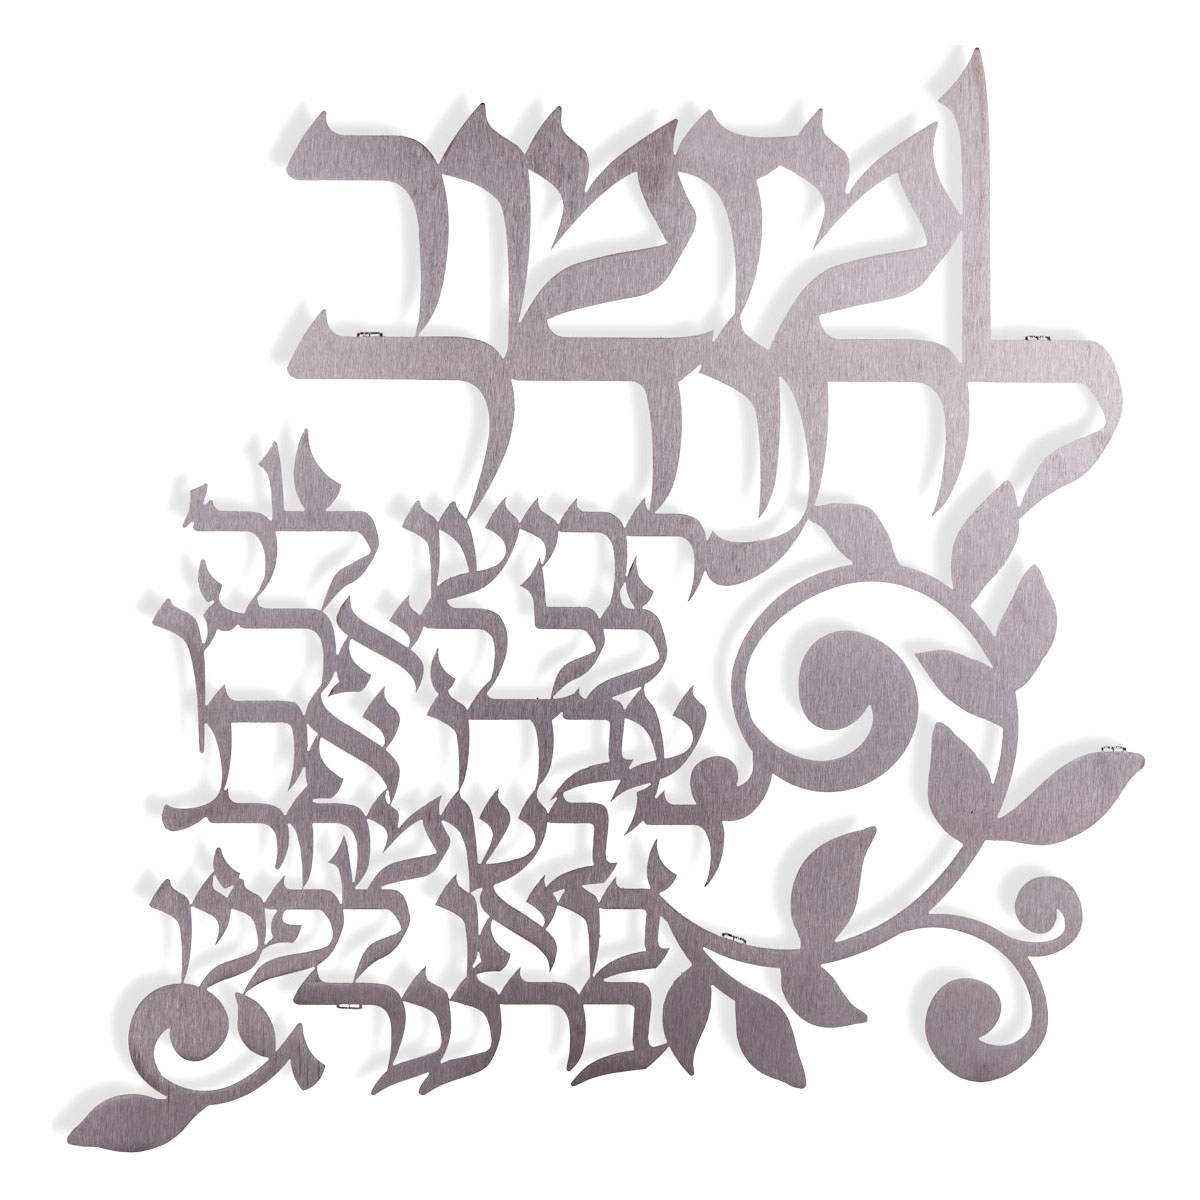 Dorit Judaica Hebrew Wall Hanging – Psalm of Thanksgiving (Psalms 100:1-2) - 1